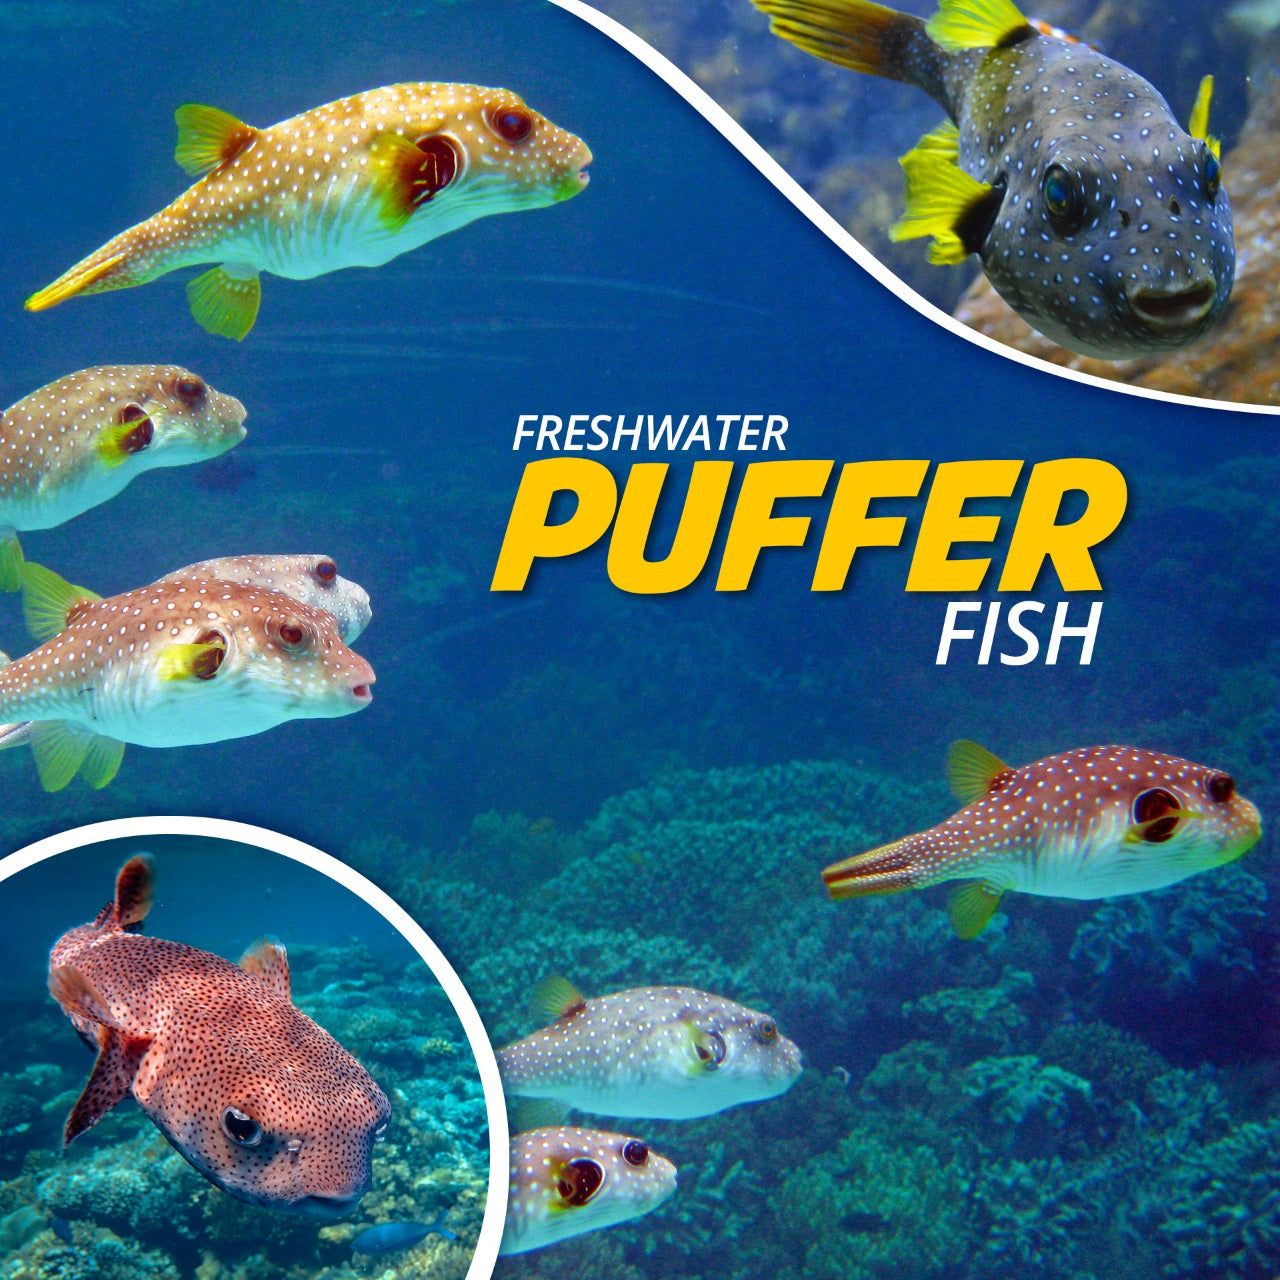 Freshwater Puffer Fish - Fishing Nice